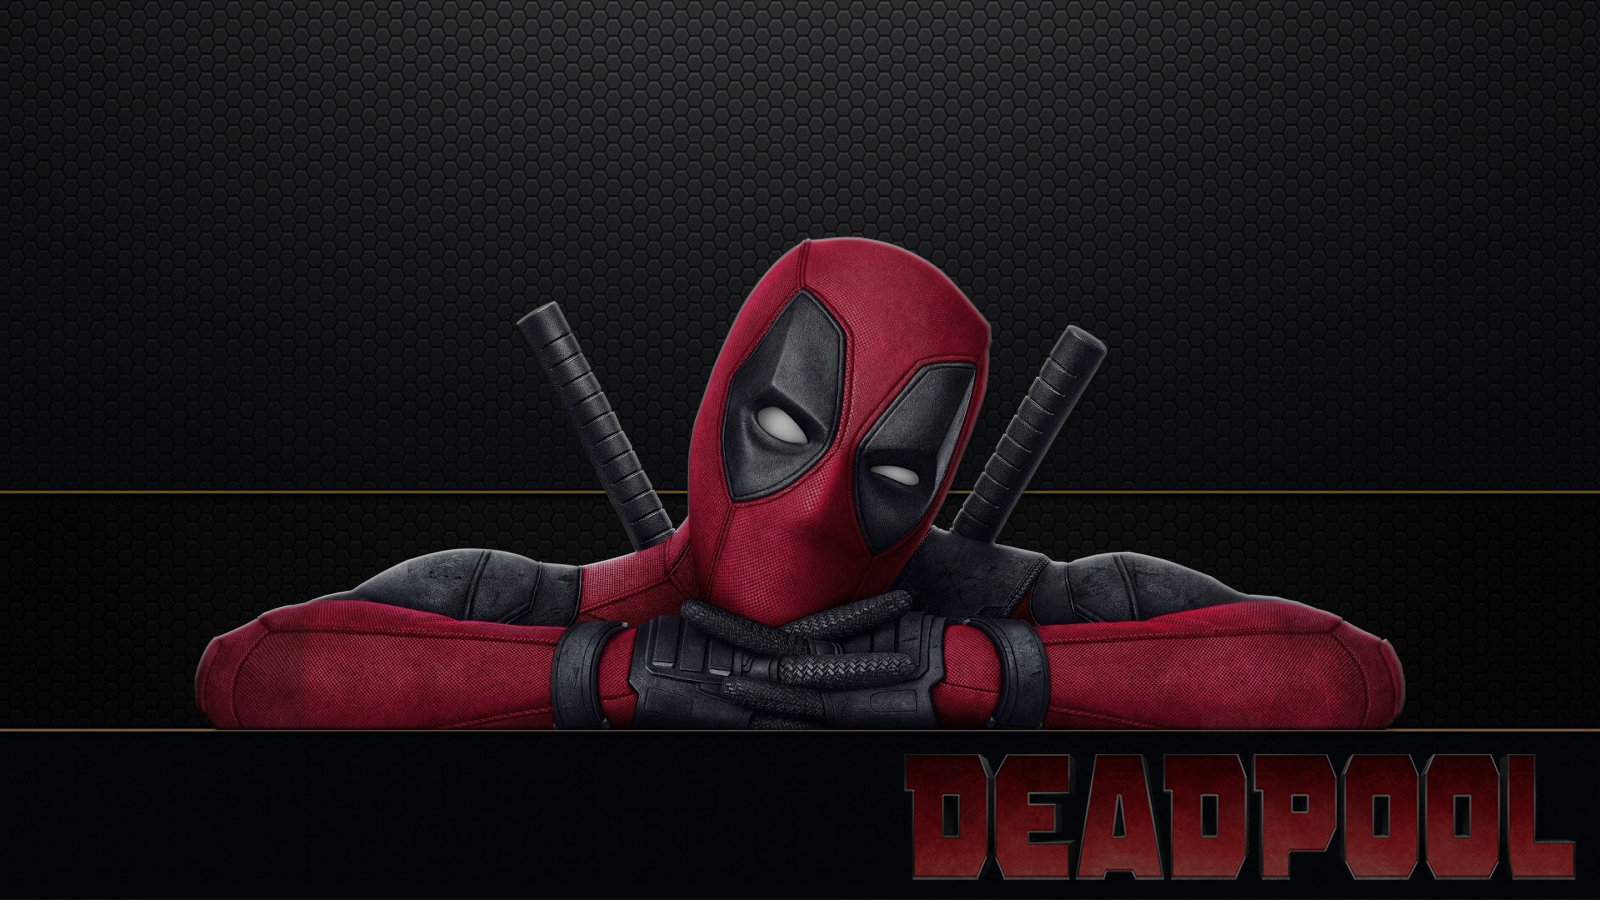 Deadpool Movie wallpapers 1600x900 desktop backgrounds